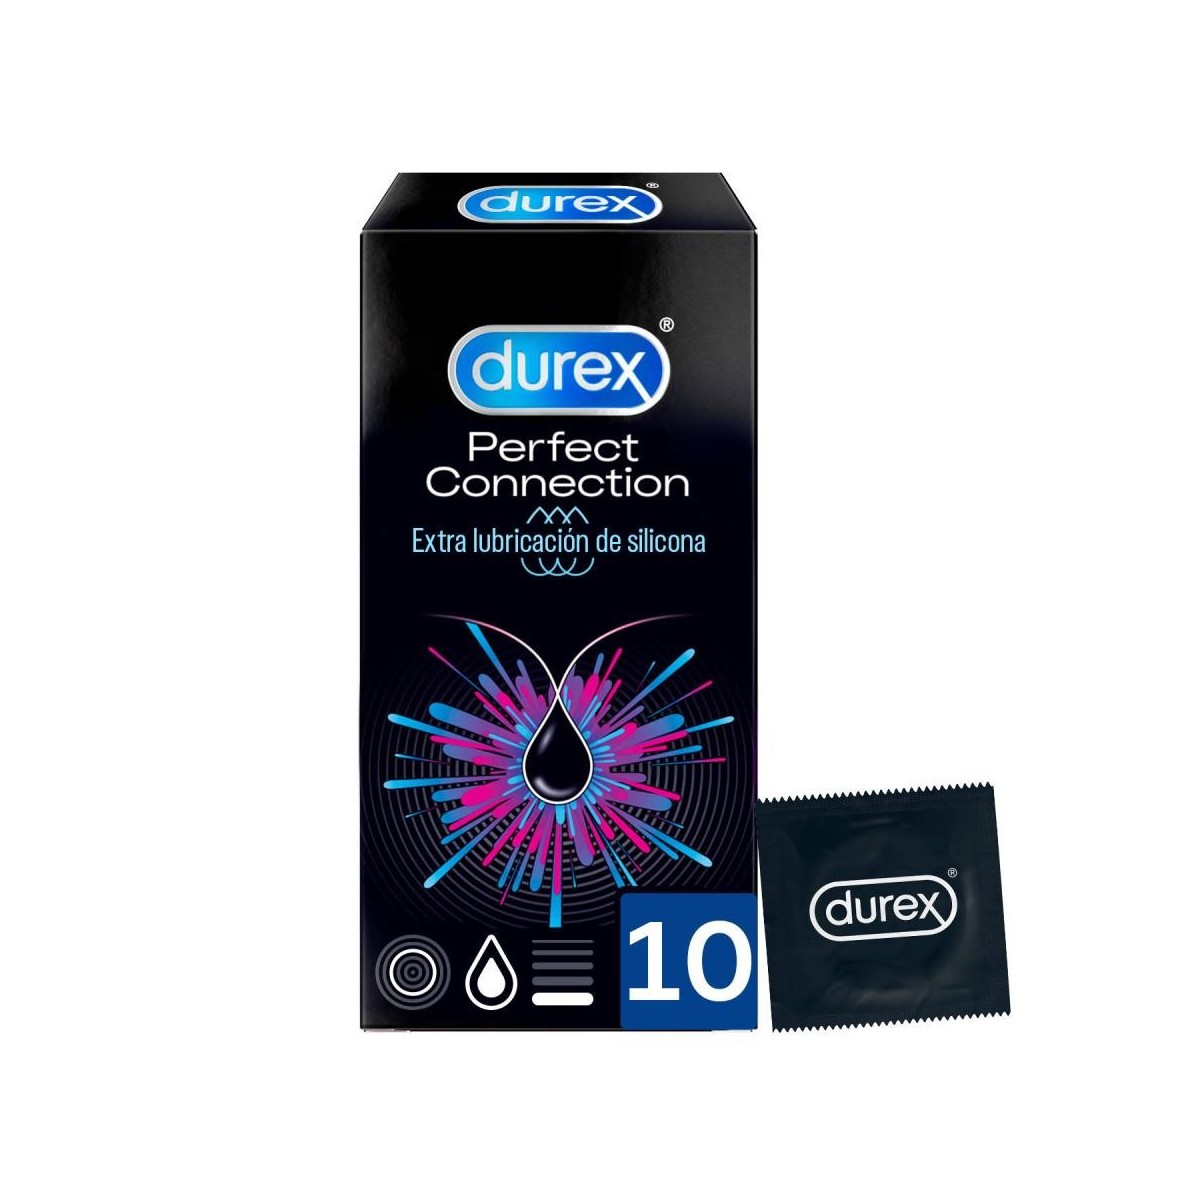 durex-perfect-connection-10-preservativos